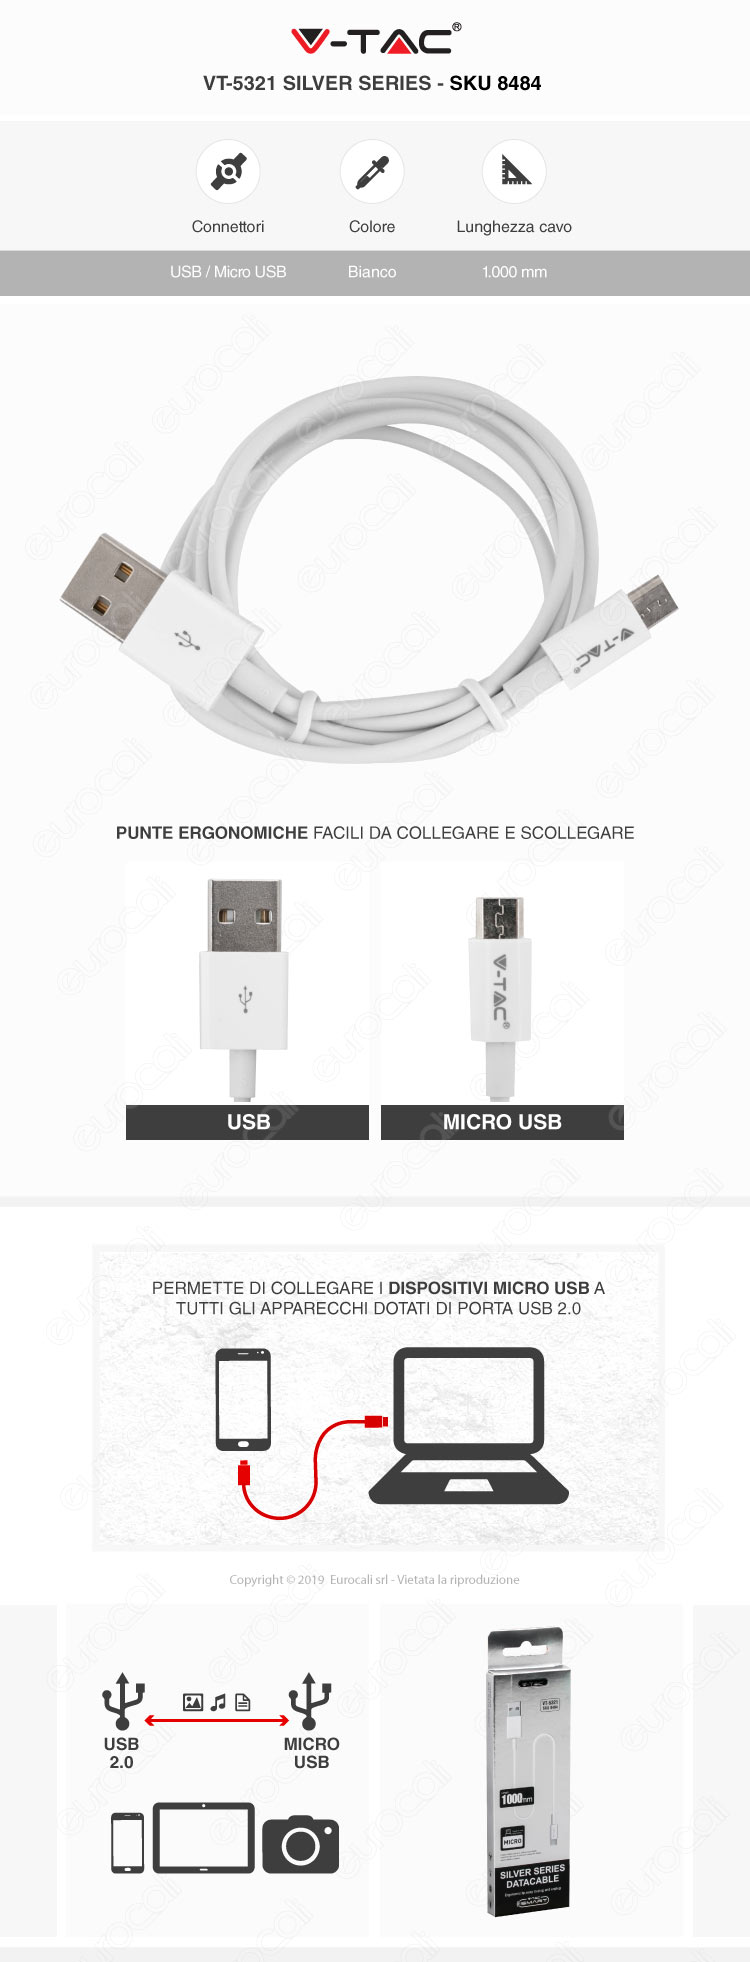 V-Tac VT-5321 Silver series USB Data Cable Micro USB Cavo Colore Bianco 1m